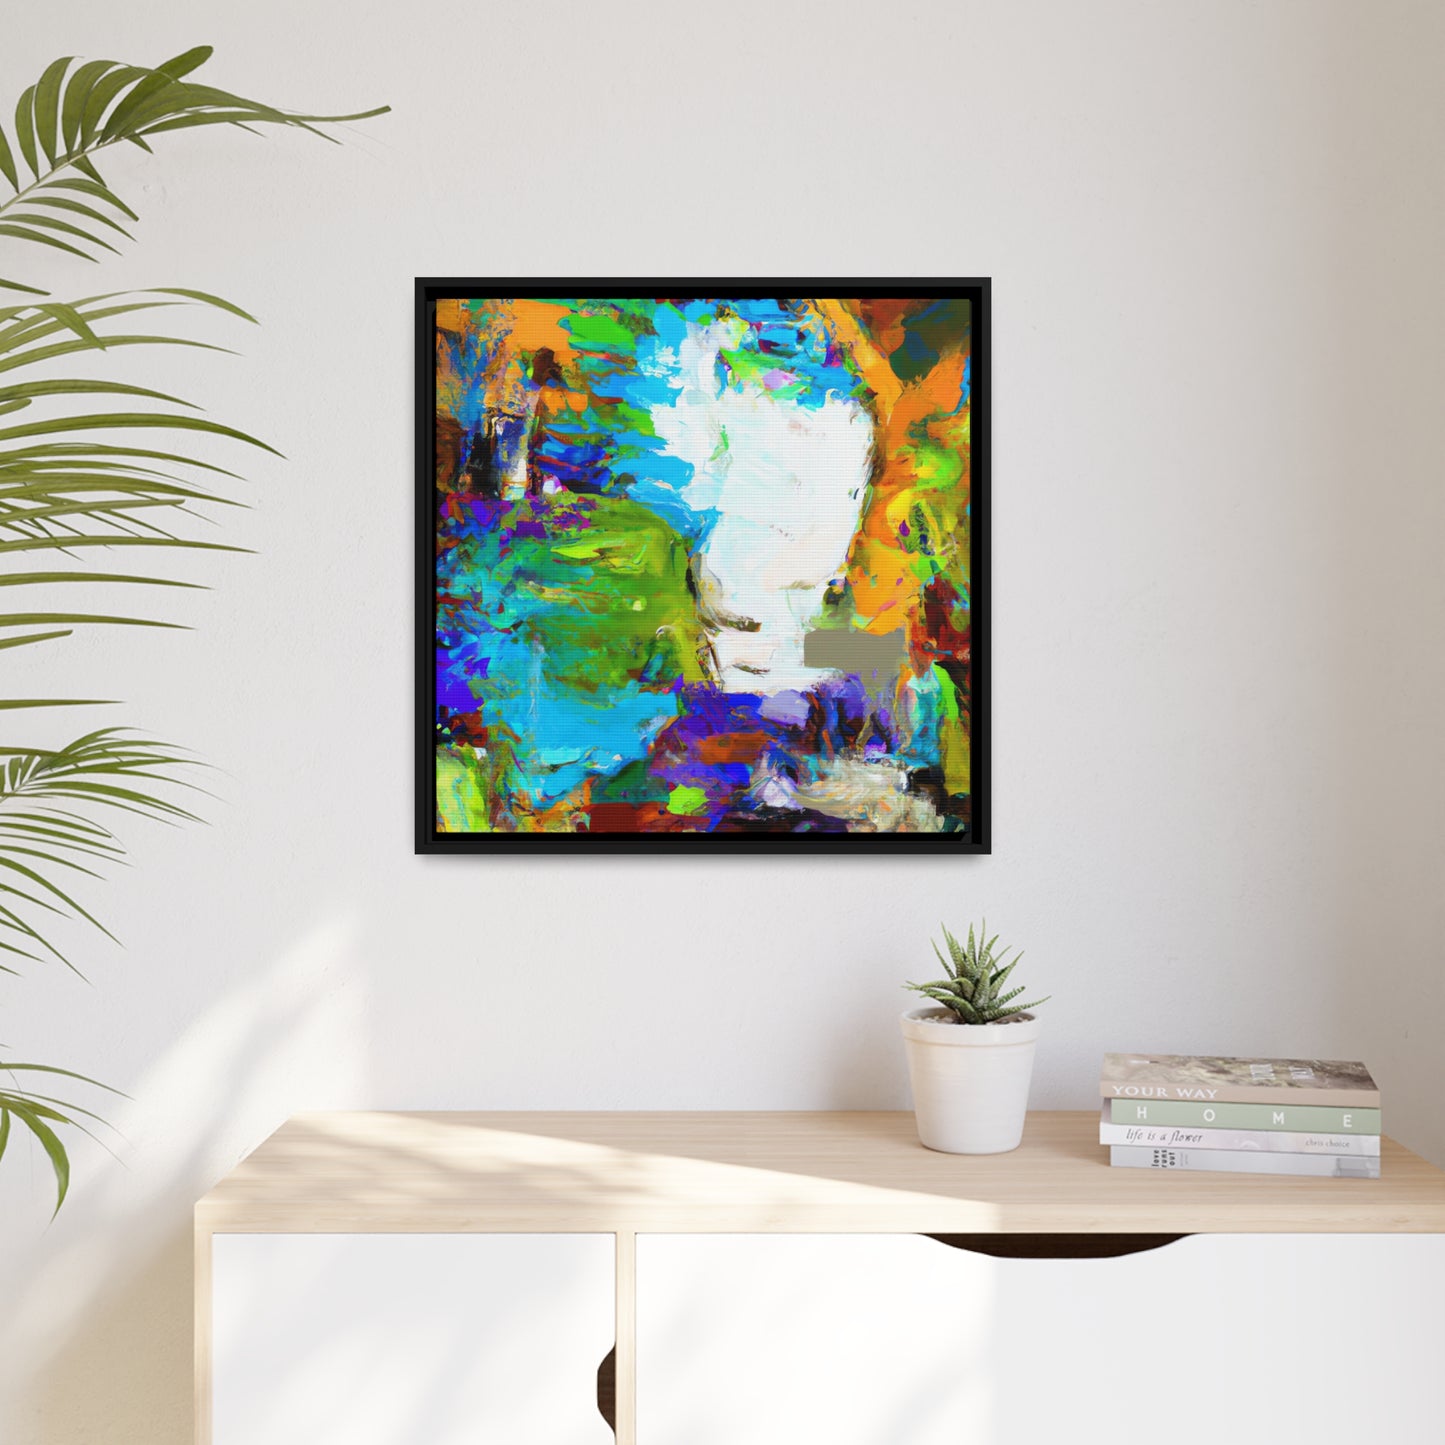 Artemisia Aston - Framed Canvas